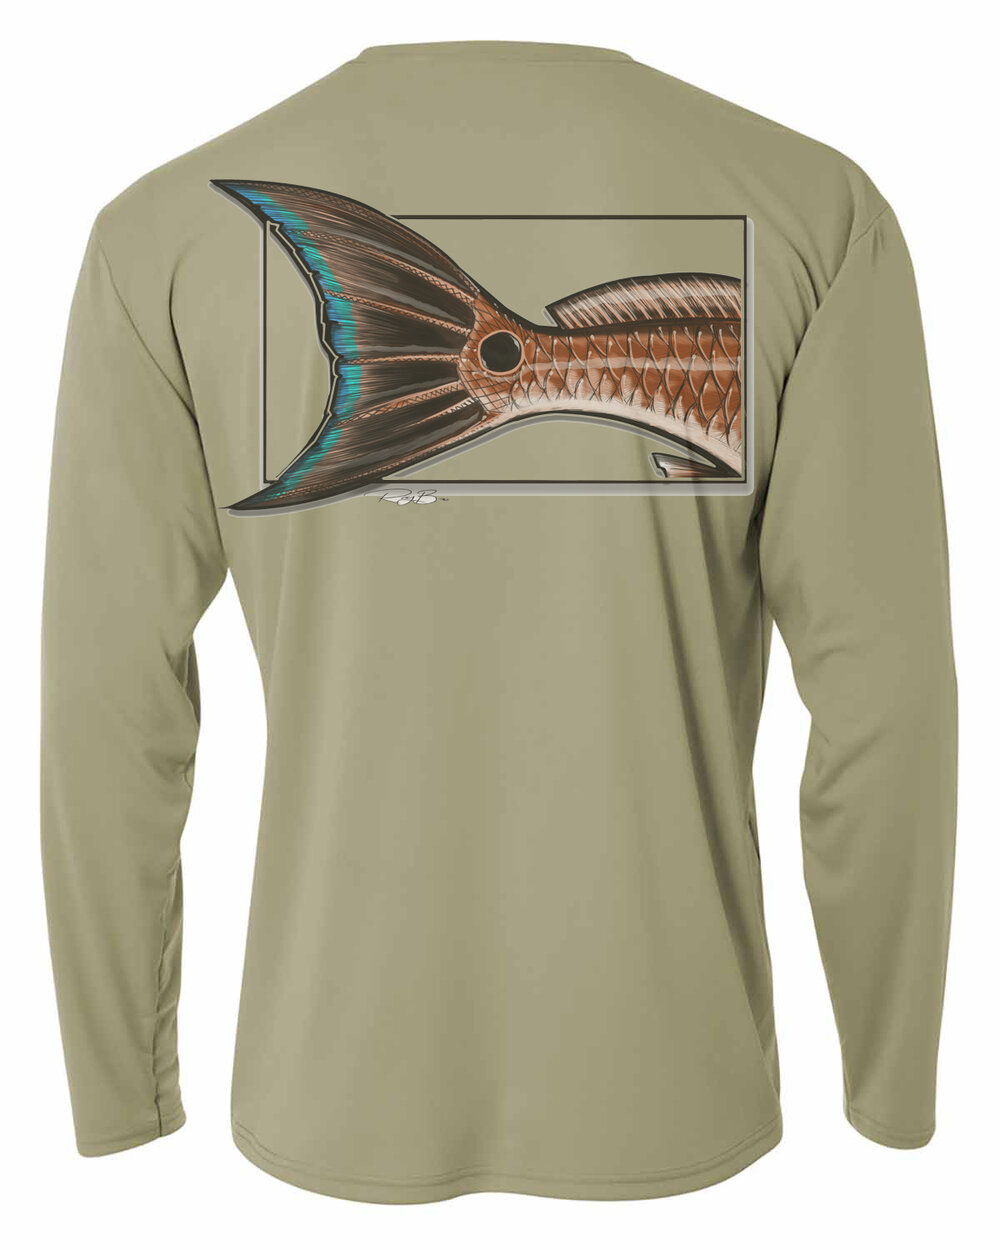 REDFISH TAIL clear fishing shirt — Ray's Custom Art